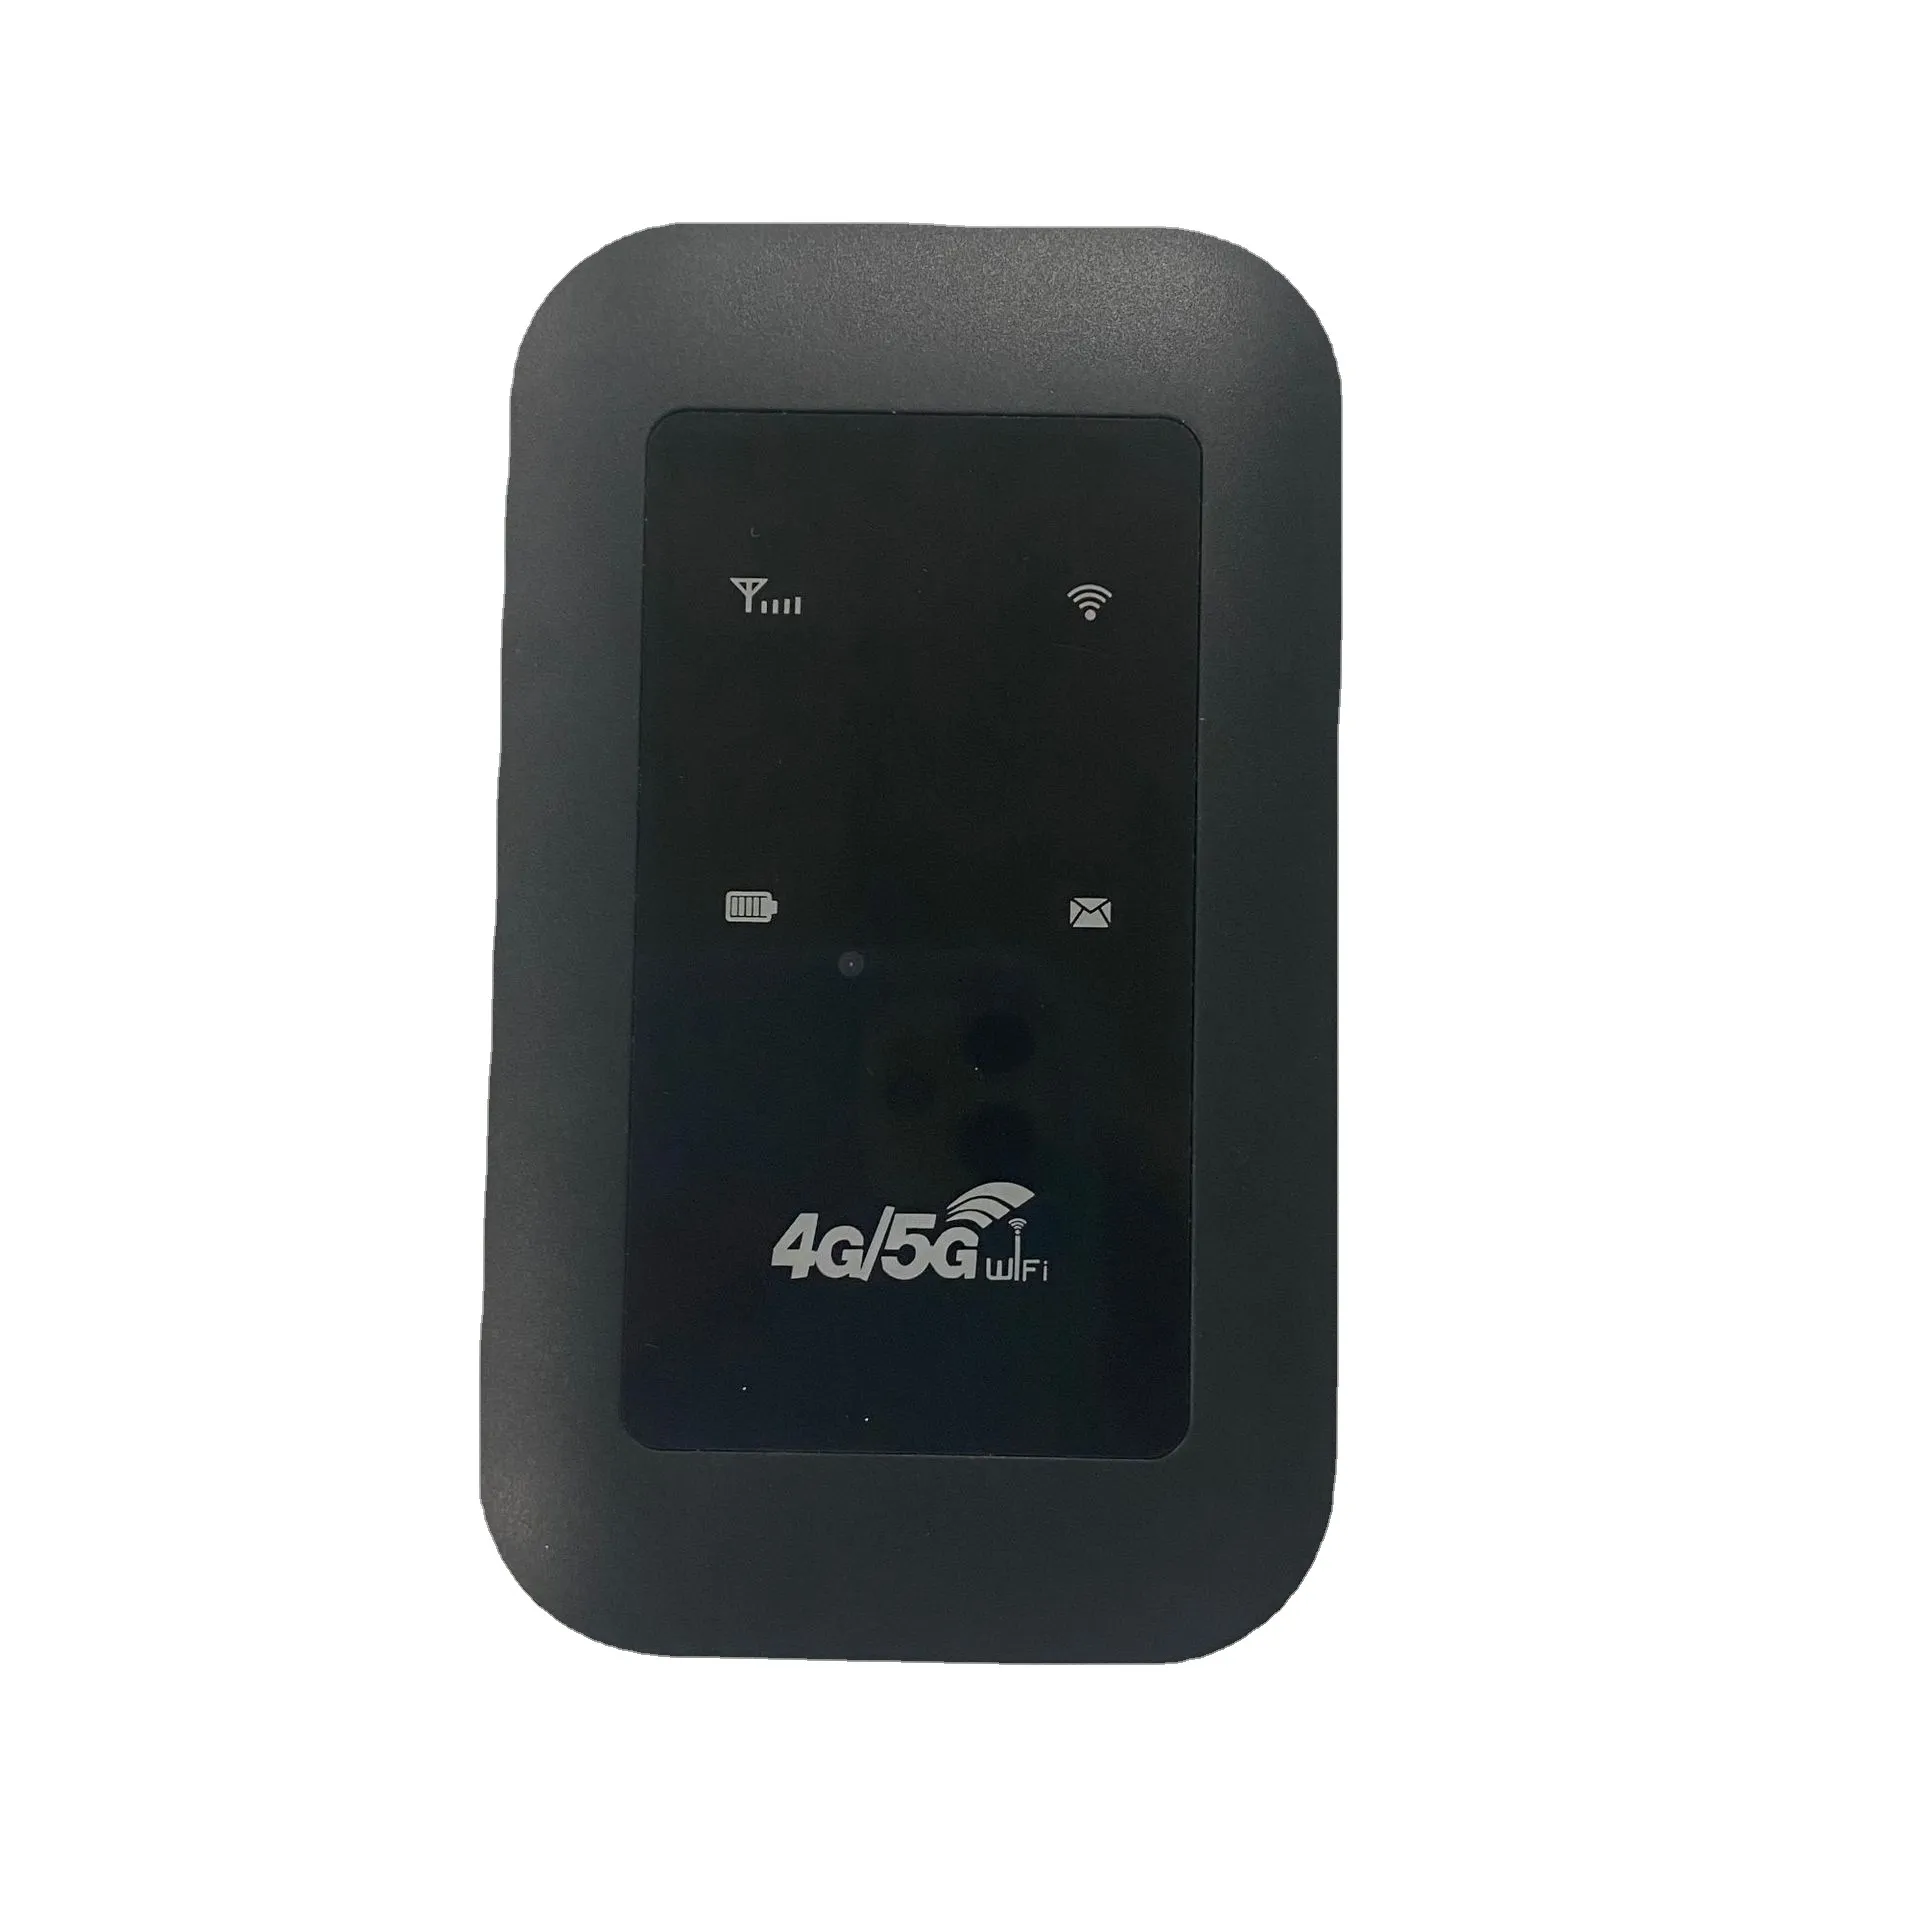 Neuer 2100mAh Akku 4G LTE Mifi Hotspot Pocket WiFi Router mit SIM-Kartens teck platz-150 Mbit/s Geschwindigkeit, 5G kompatibel